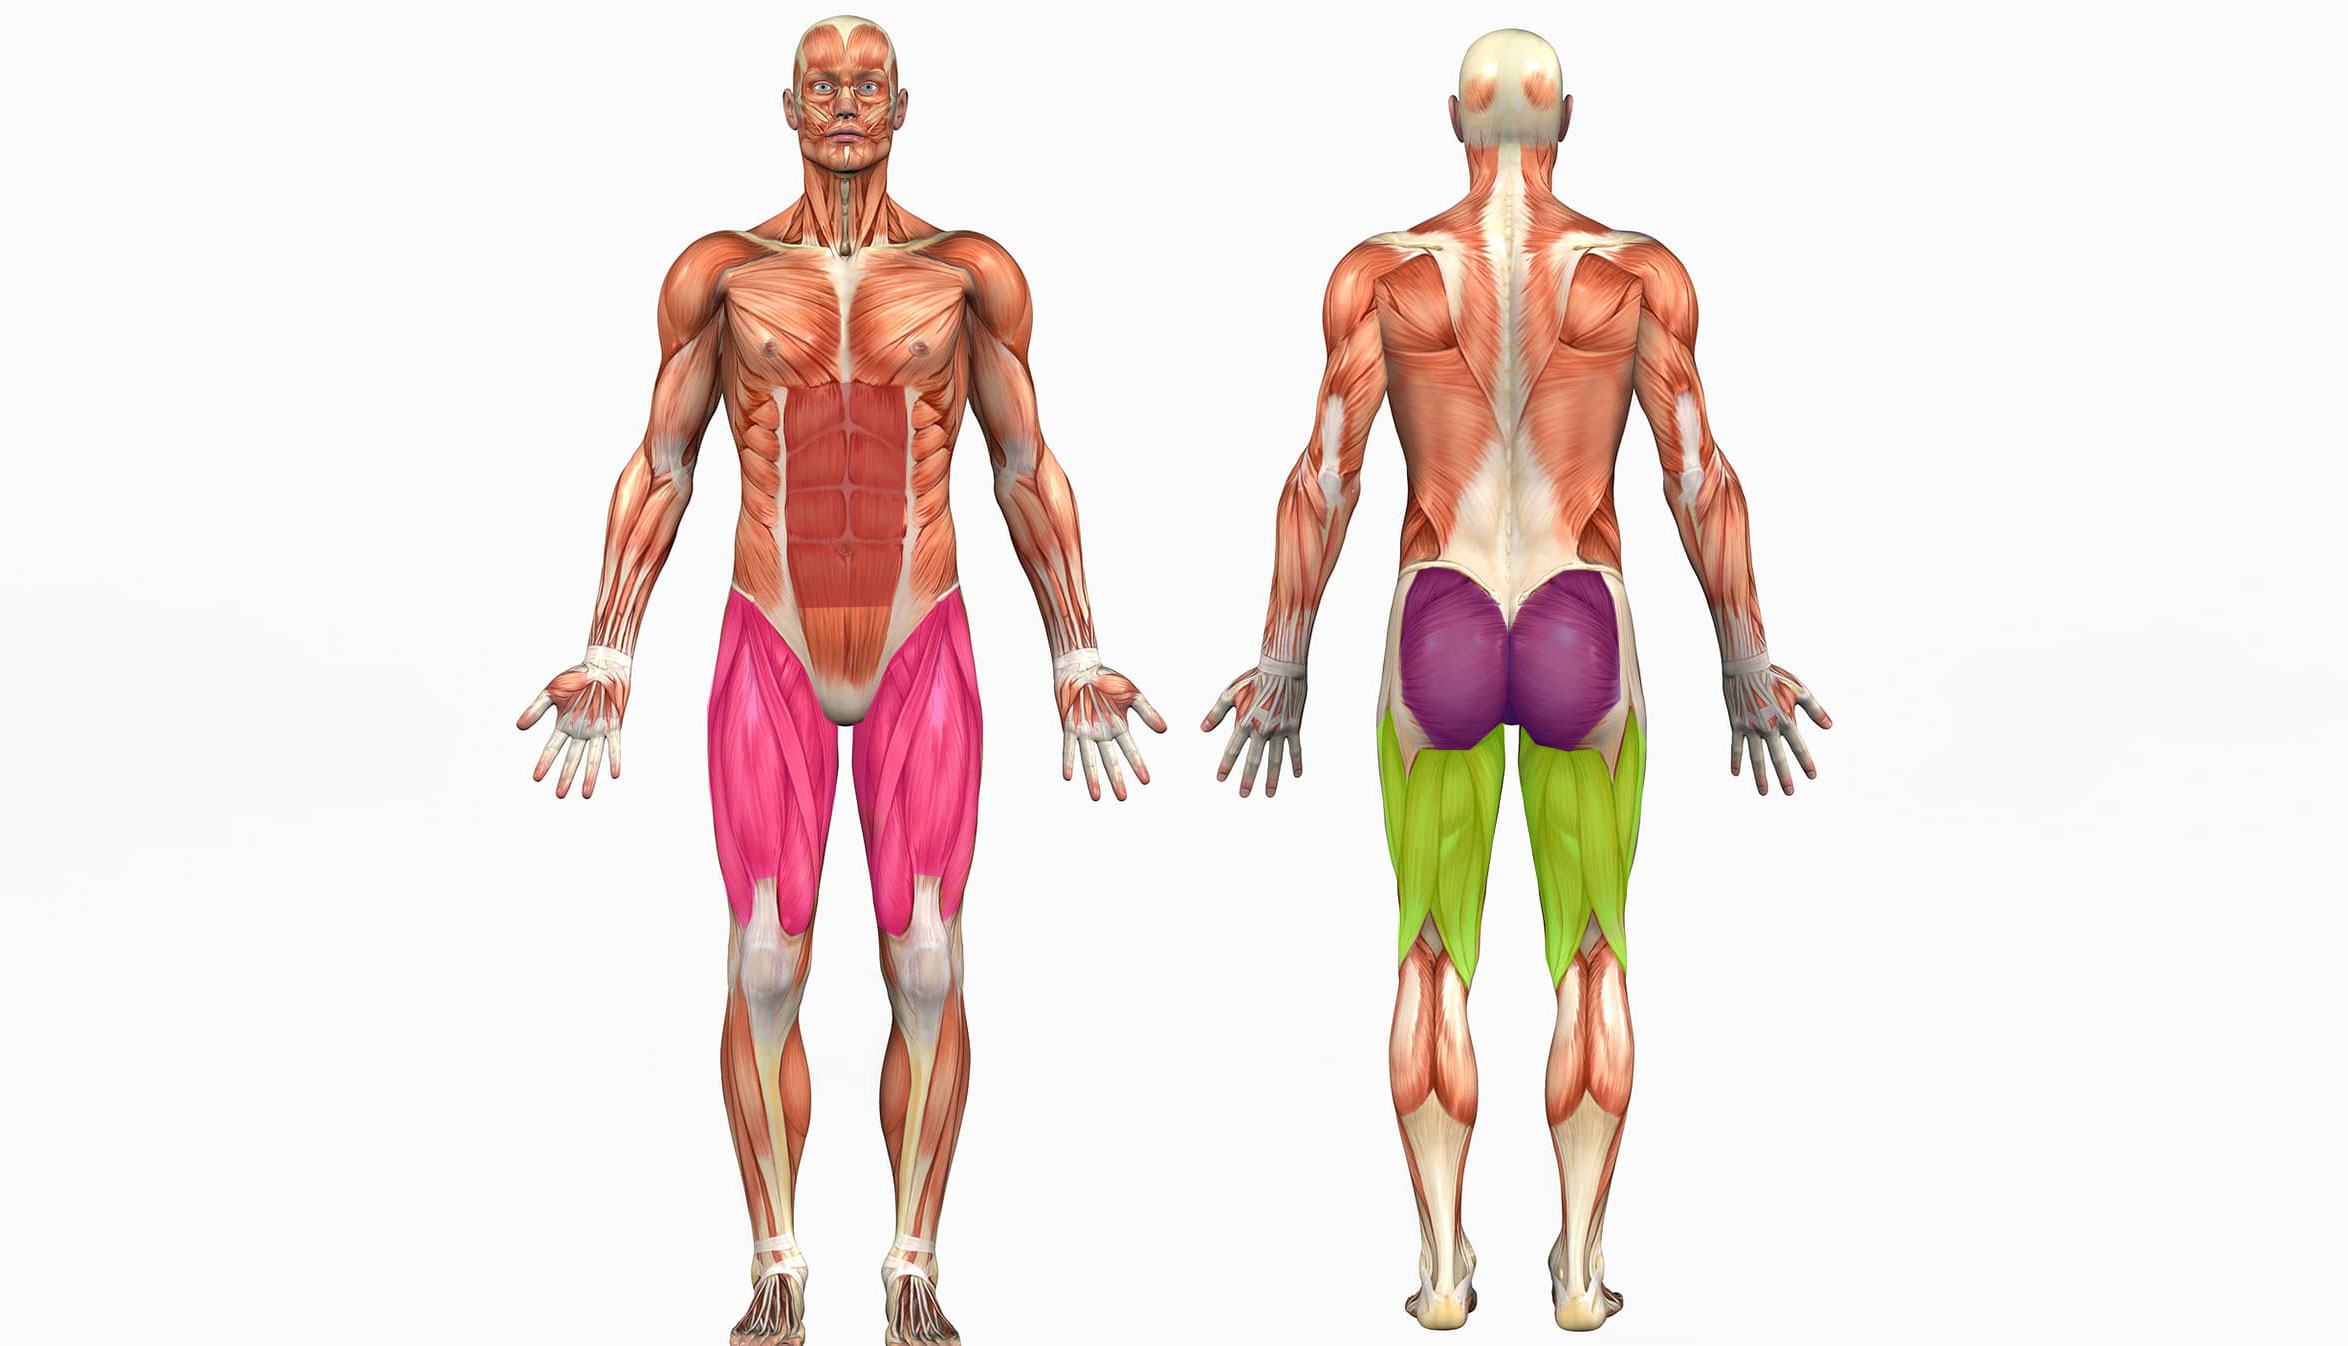 Мышцы картинка. Мышцы тела человека. Мышечная анатомия. Мускулы человека. Мускулатура анатомия тела.